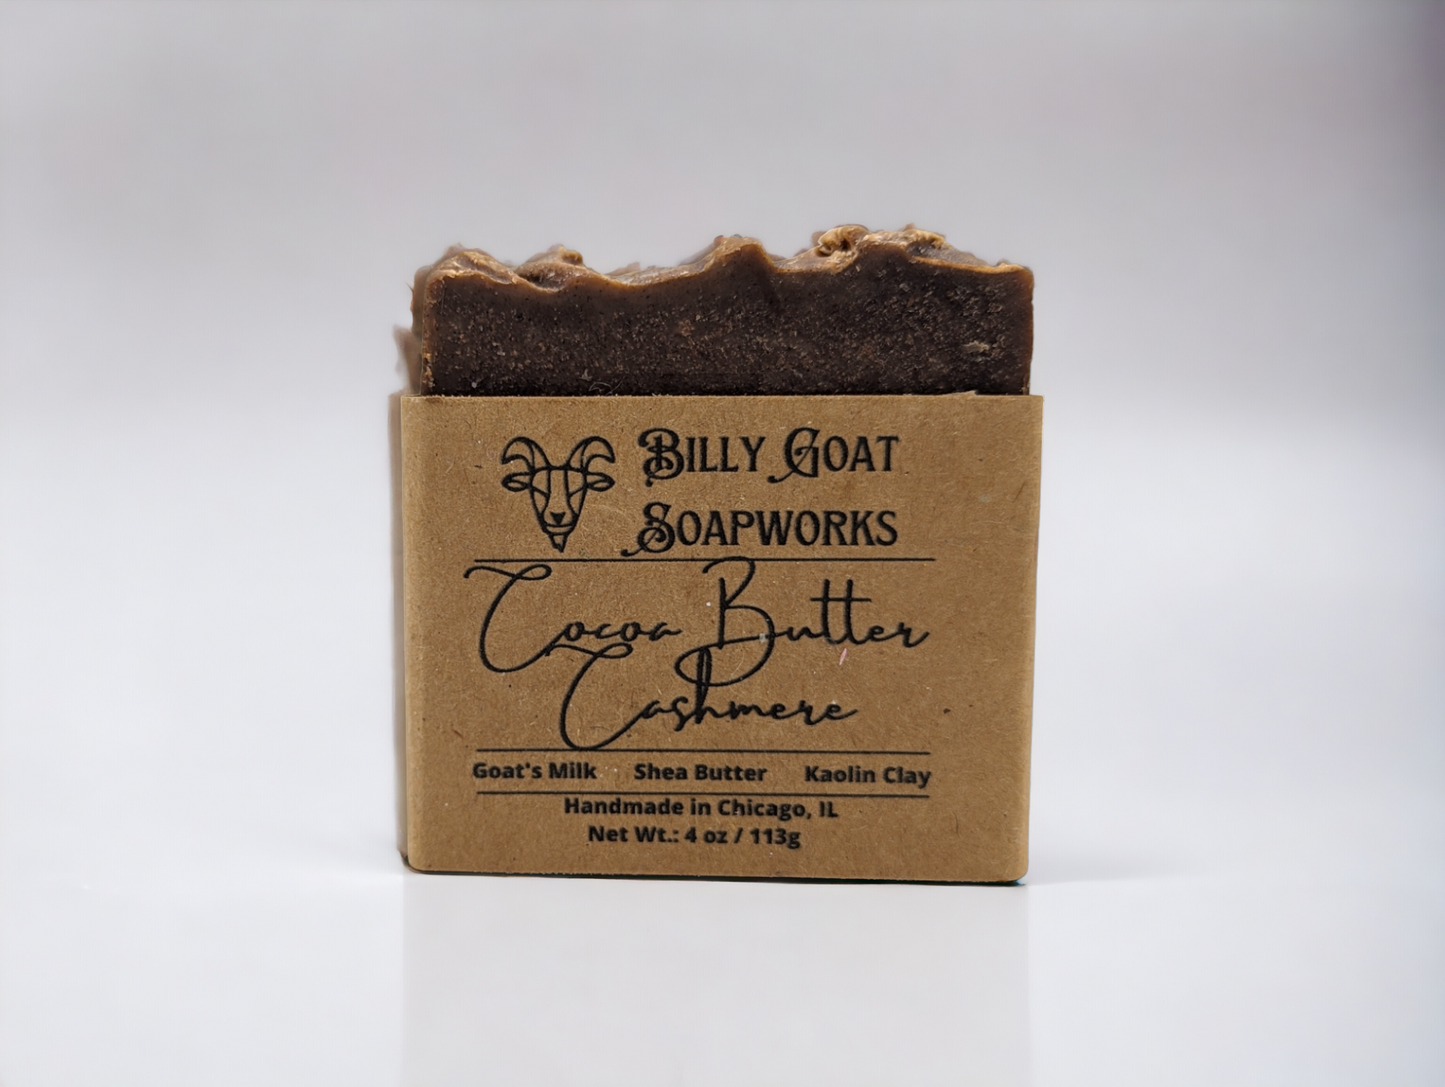 Cocoa Butter Cashmere Goat's Milk Soap